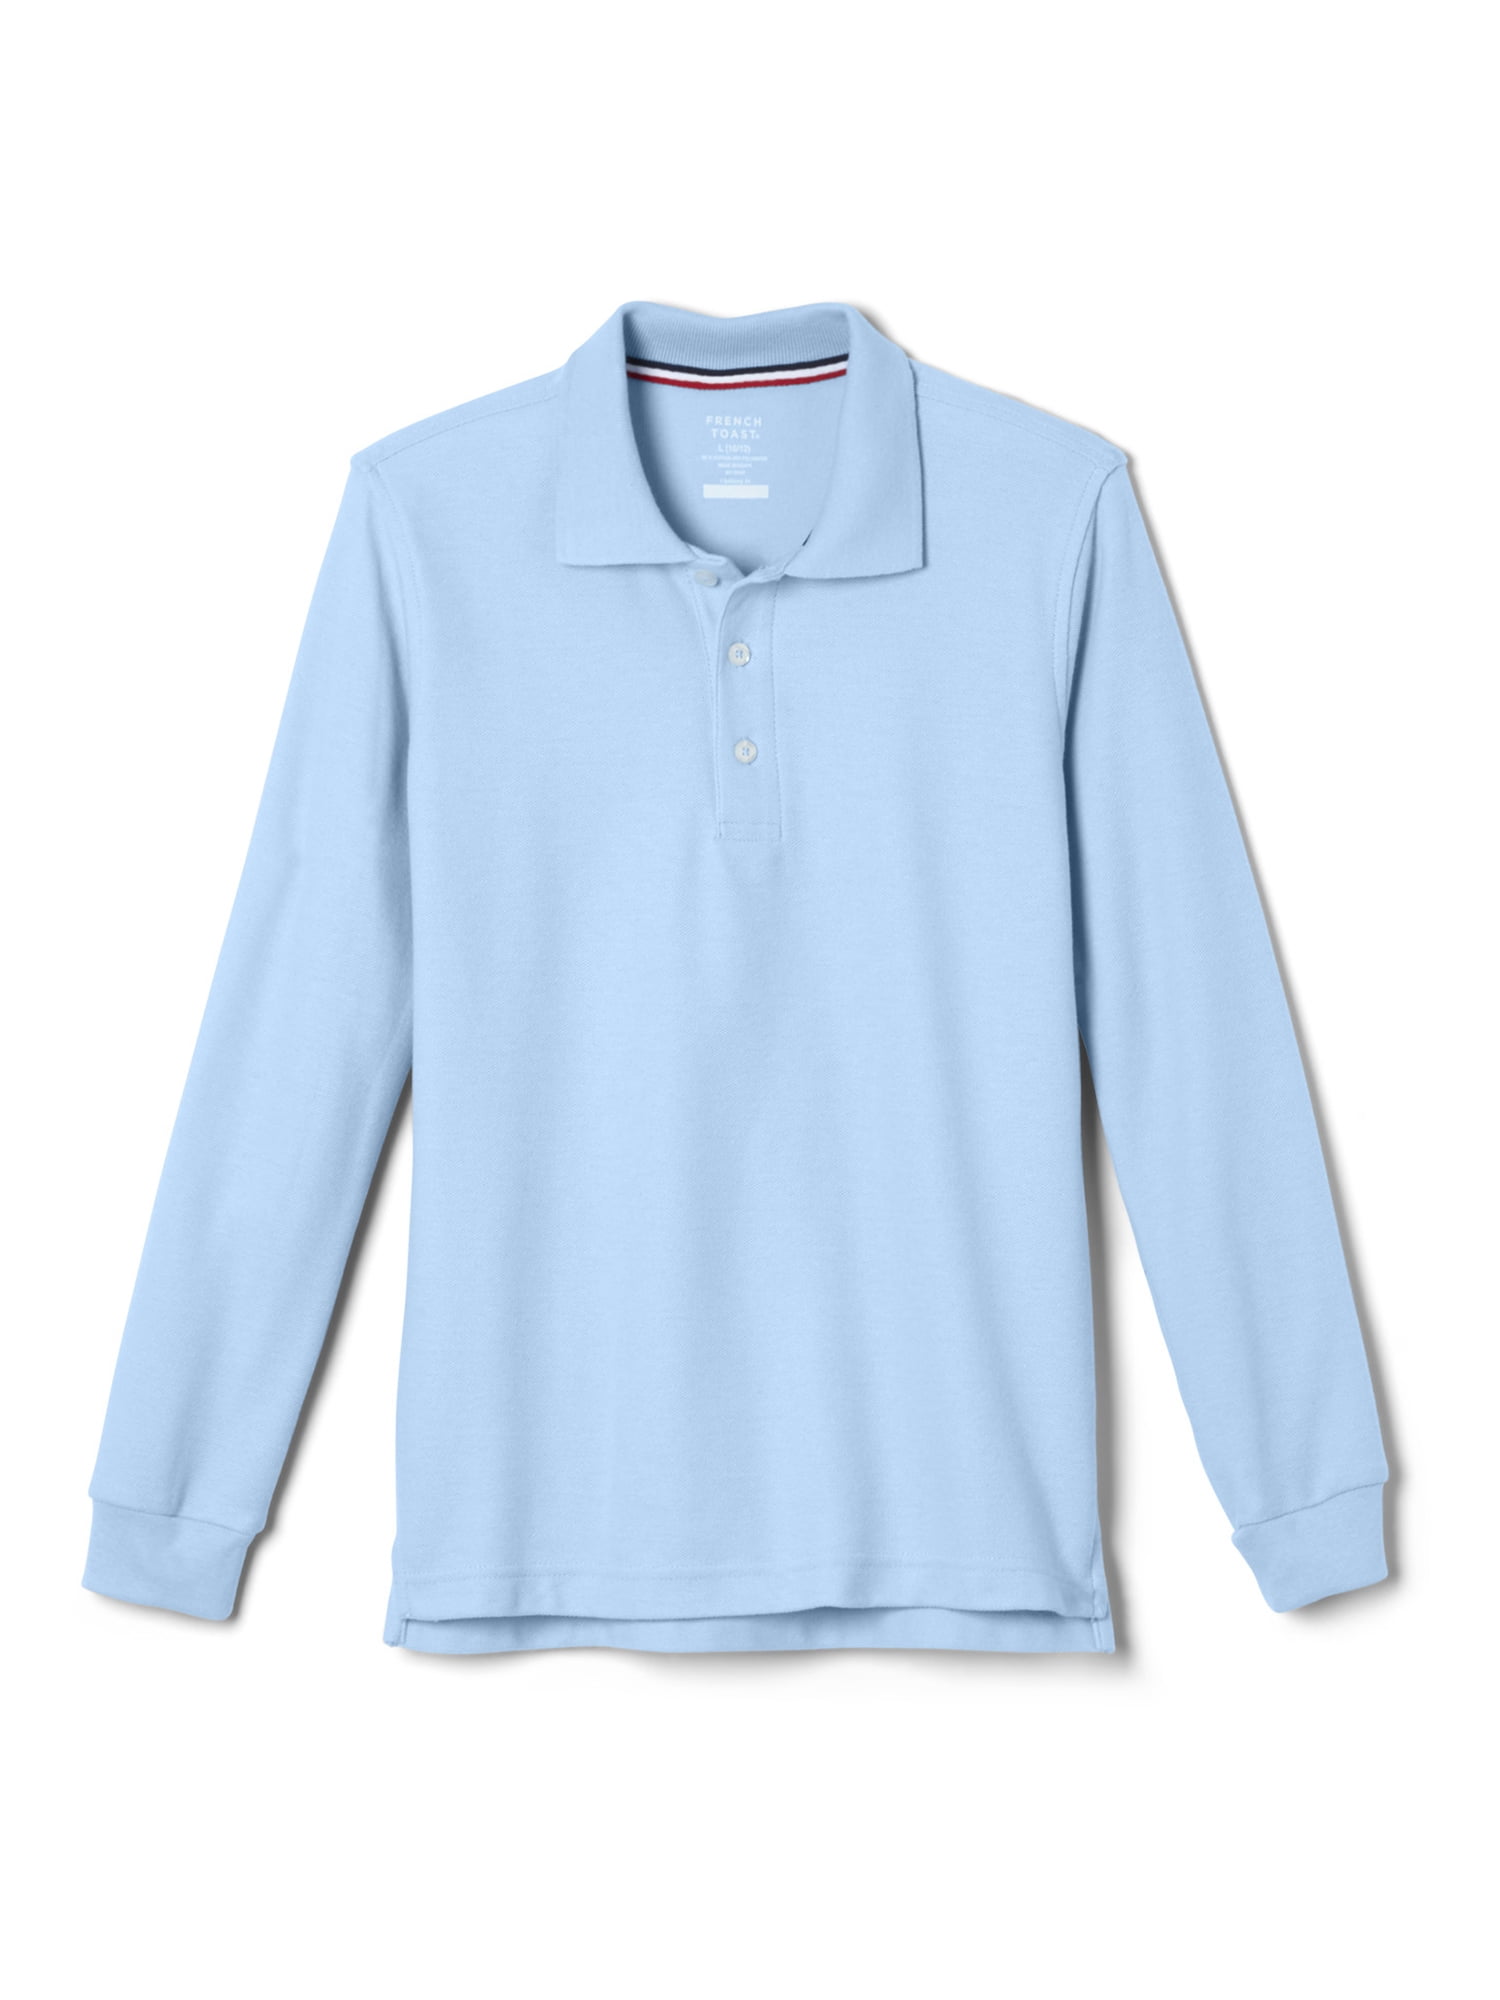 3 Or 5 Pack FOTL Kids School Wear Long Sleeve Poly/Cotton Plain Piqué Polo Shirt 